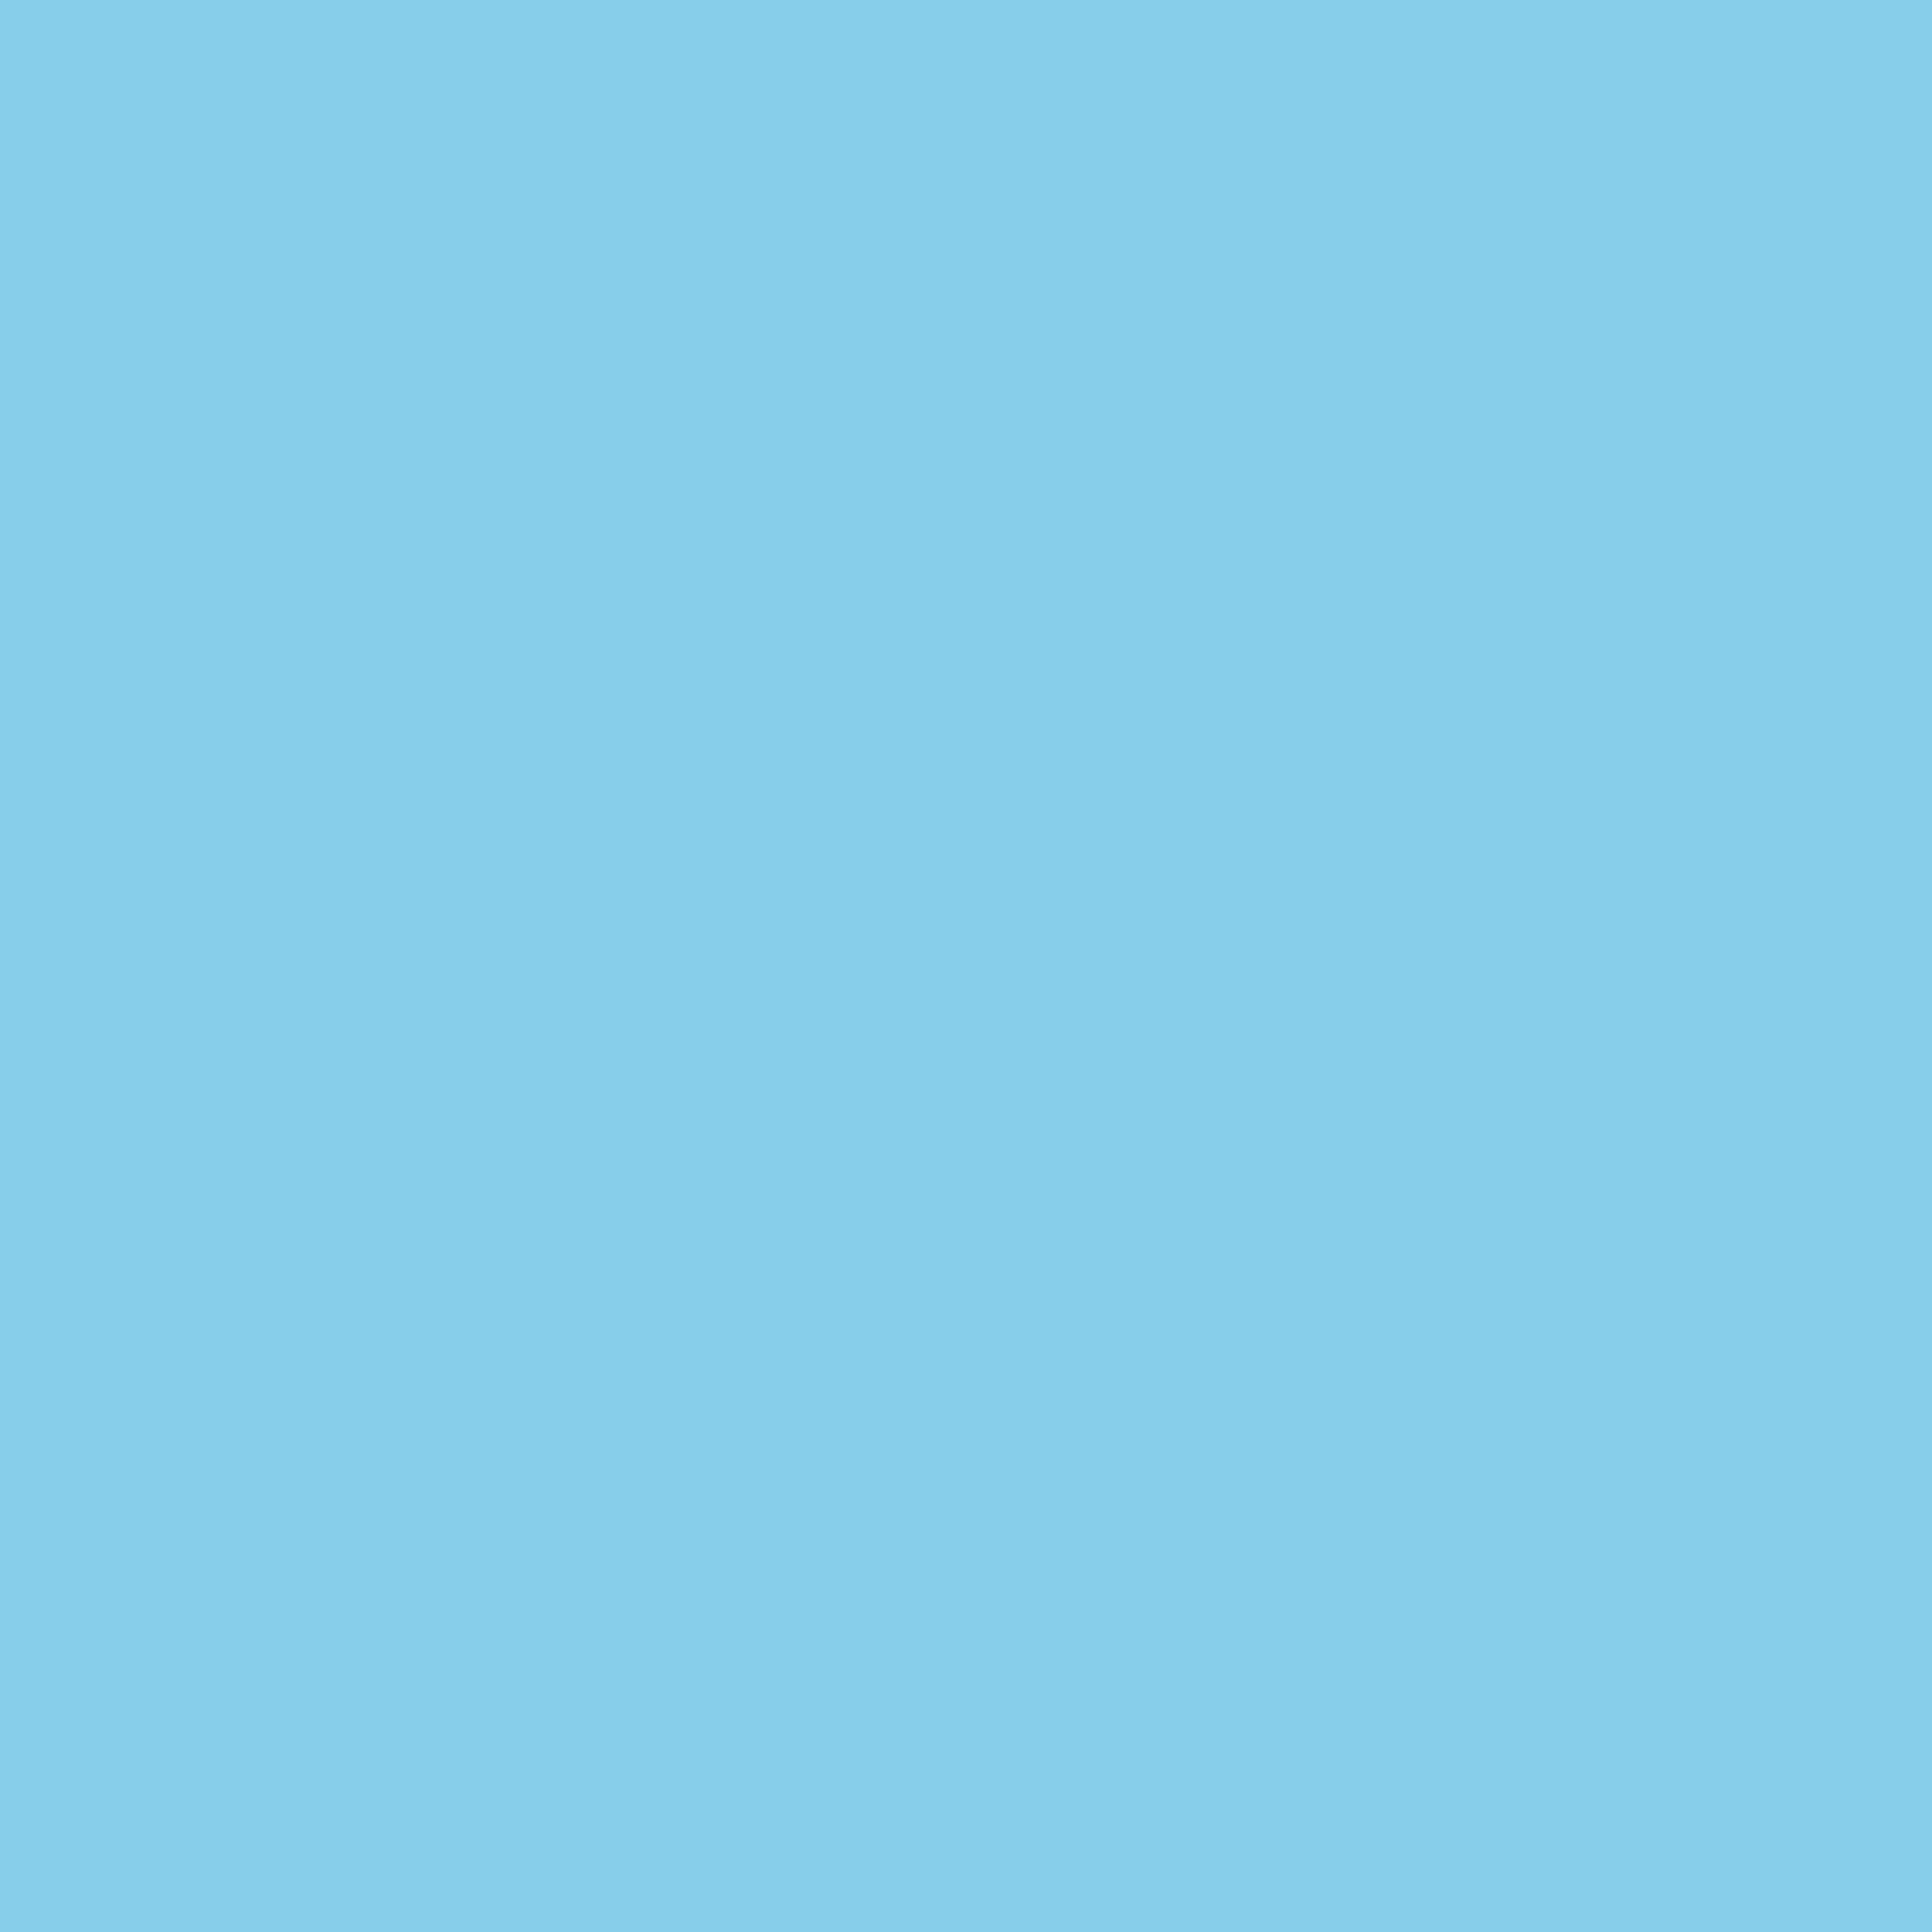 2732x2732 Sky Blue Solid Color Background